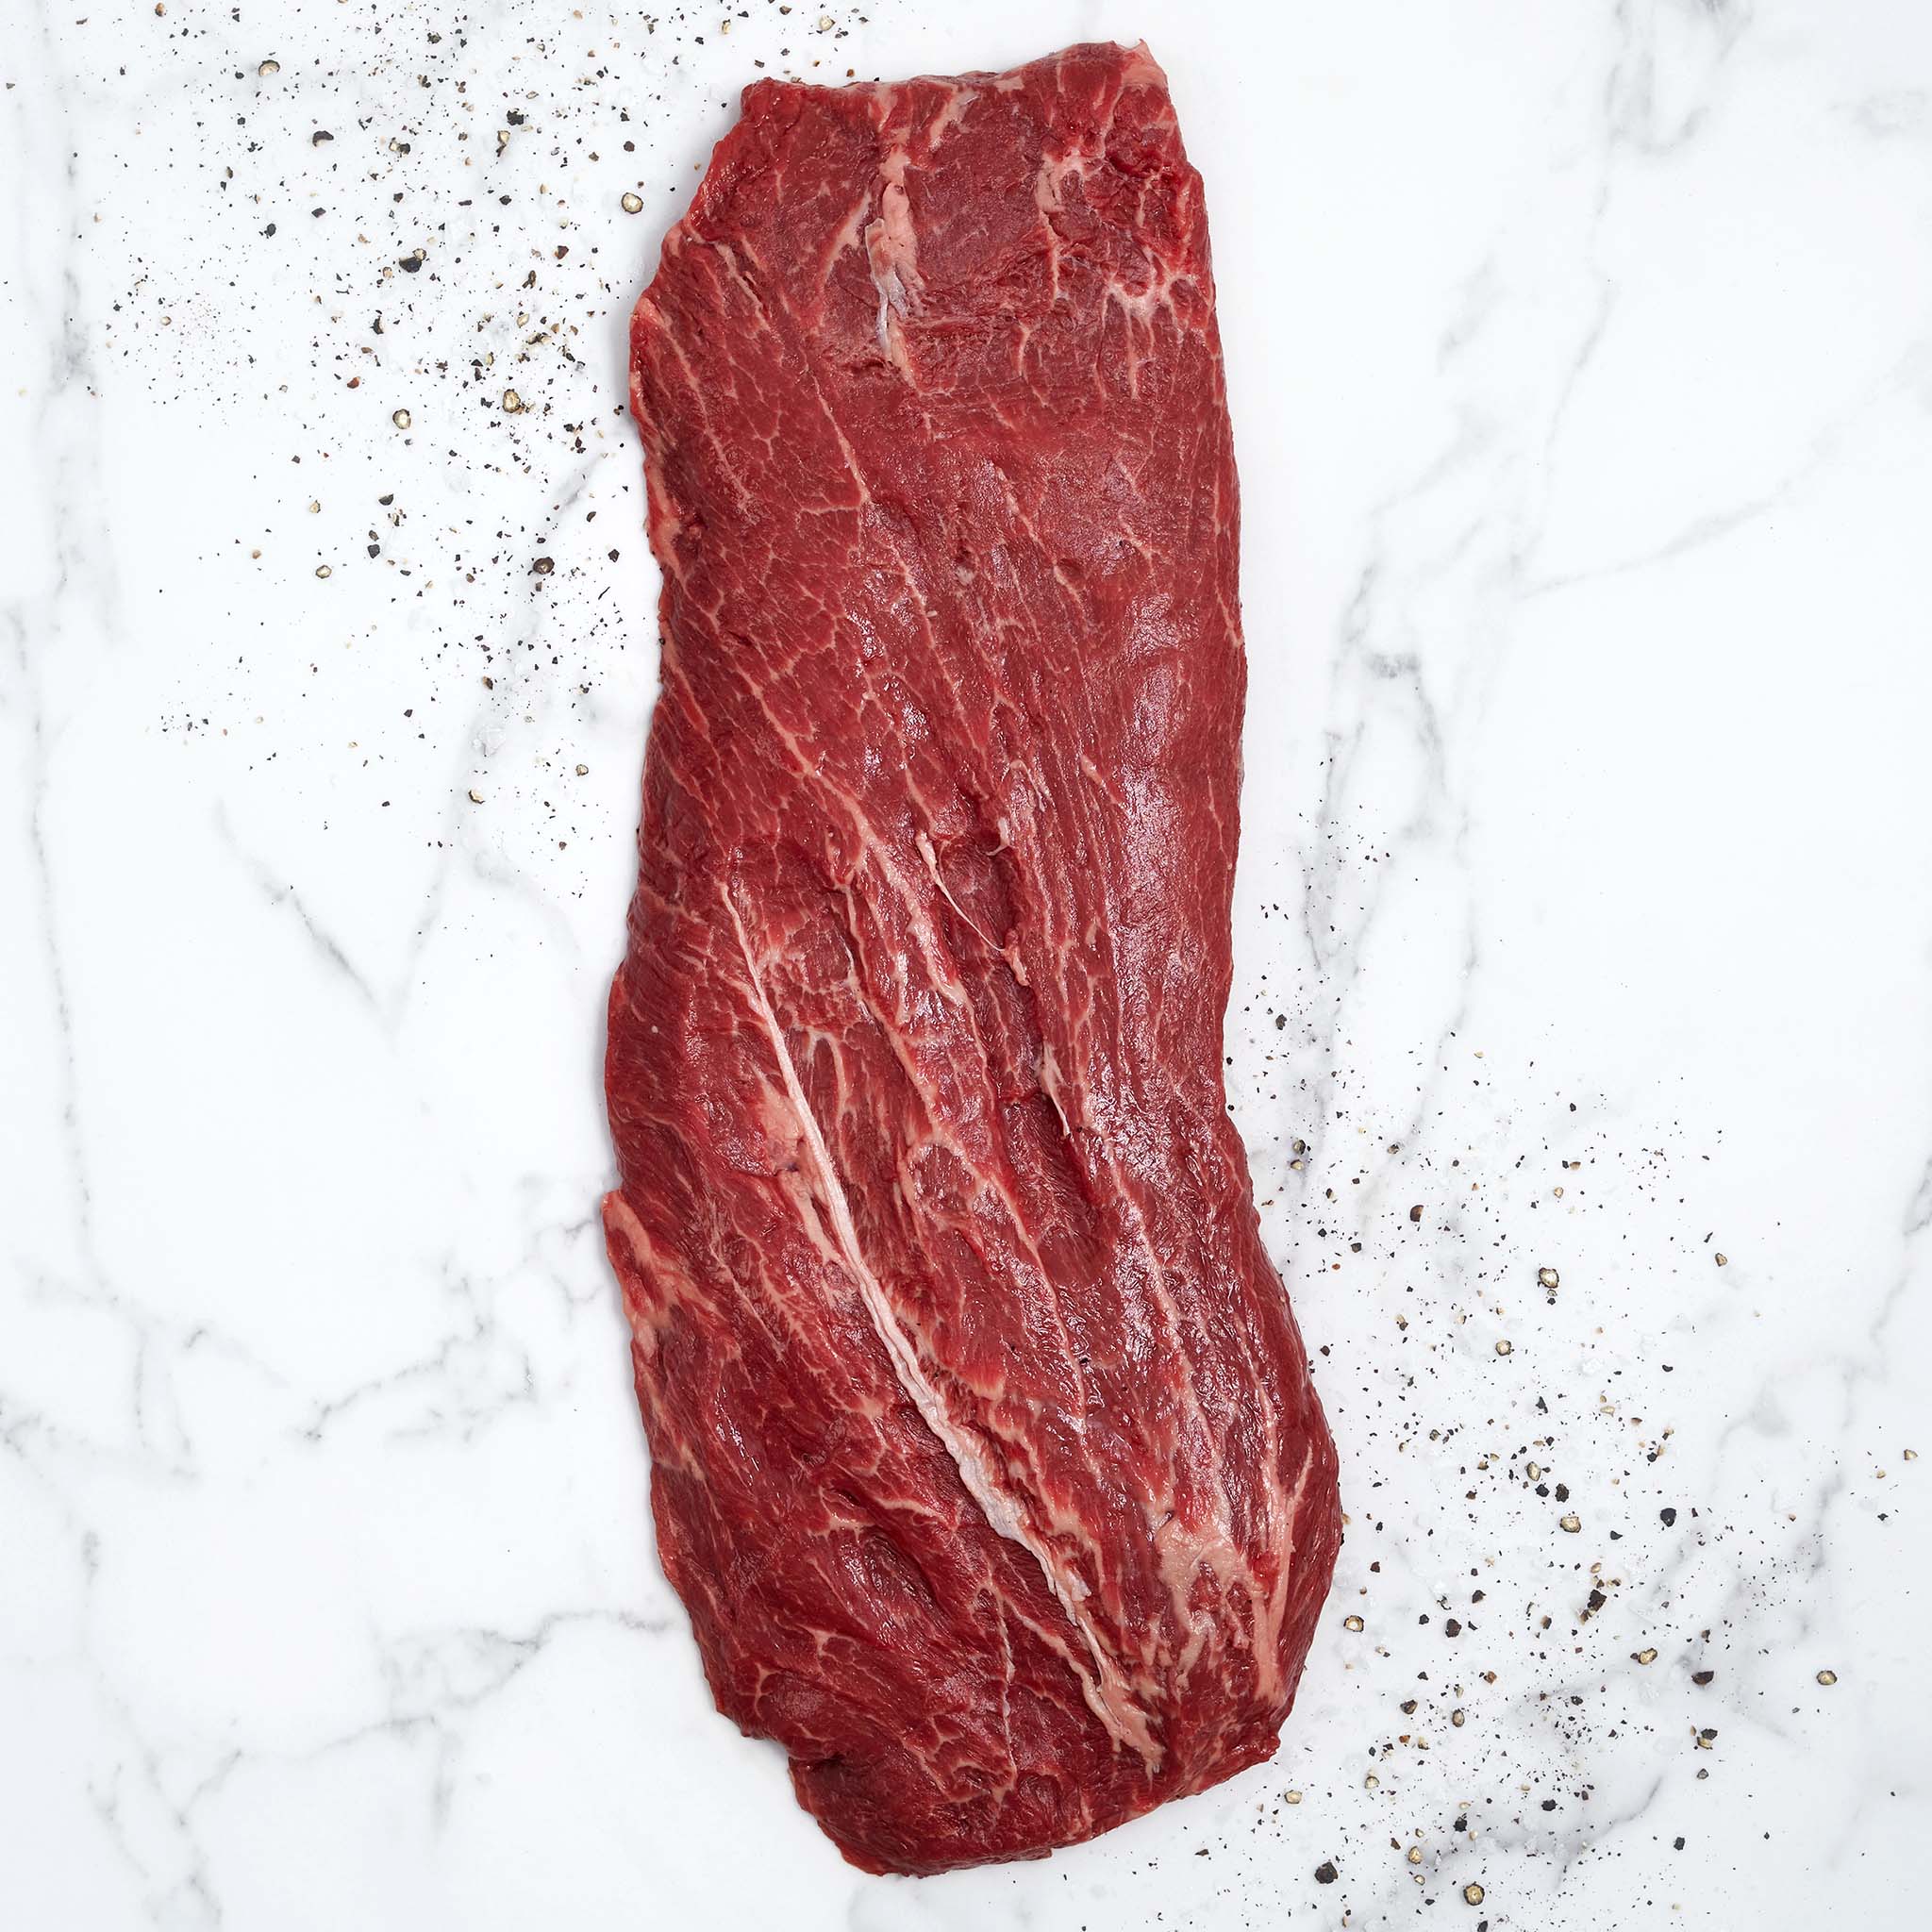 USDA Choice Flat Iron Steak